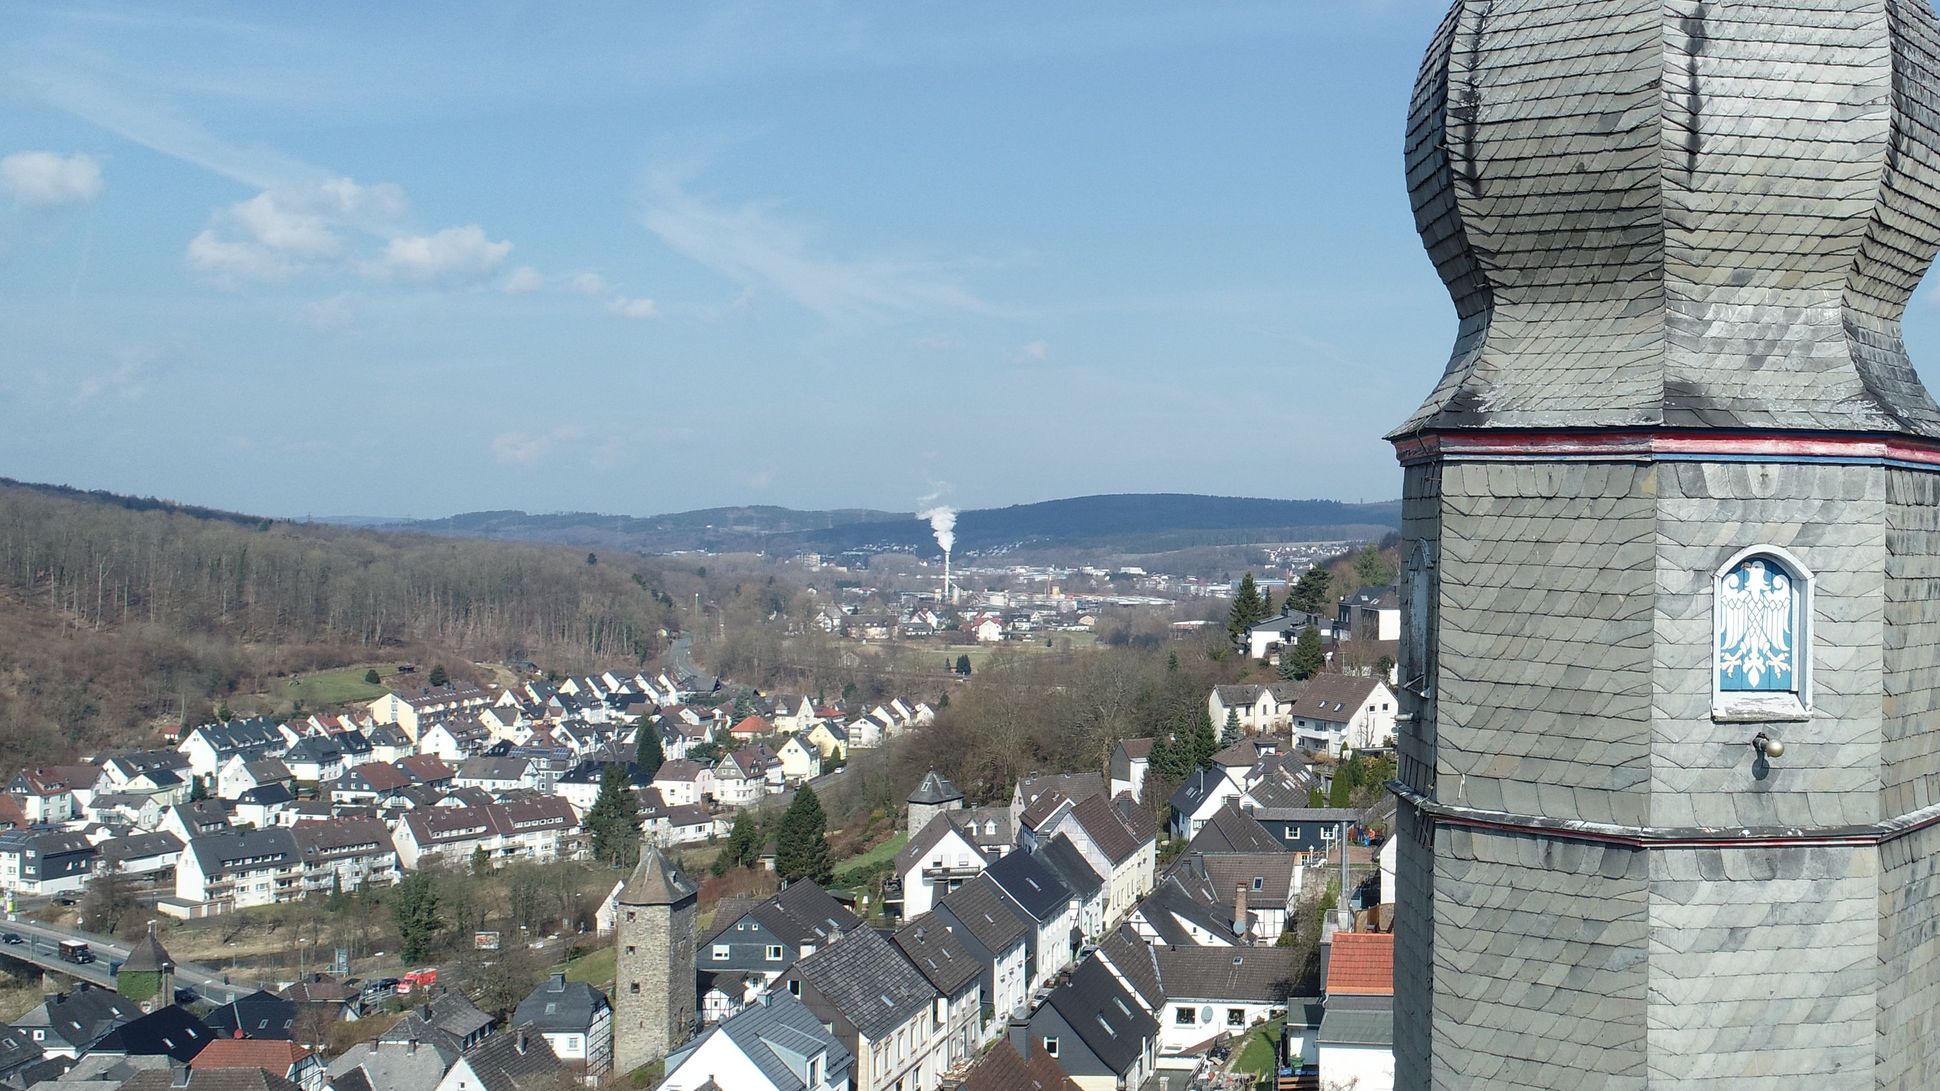 Glockenturm Arnsberg